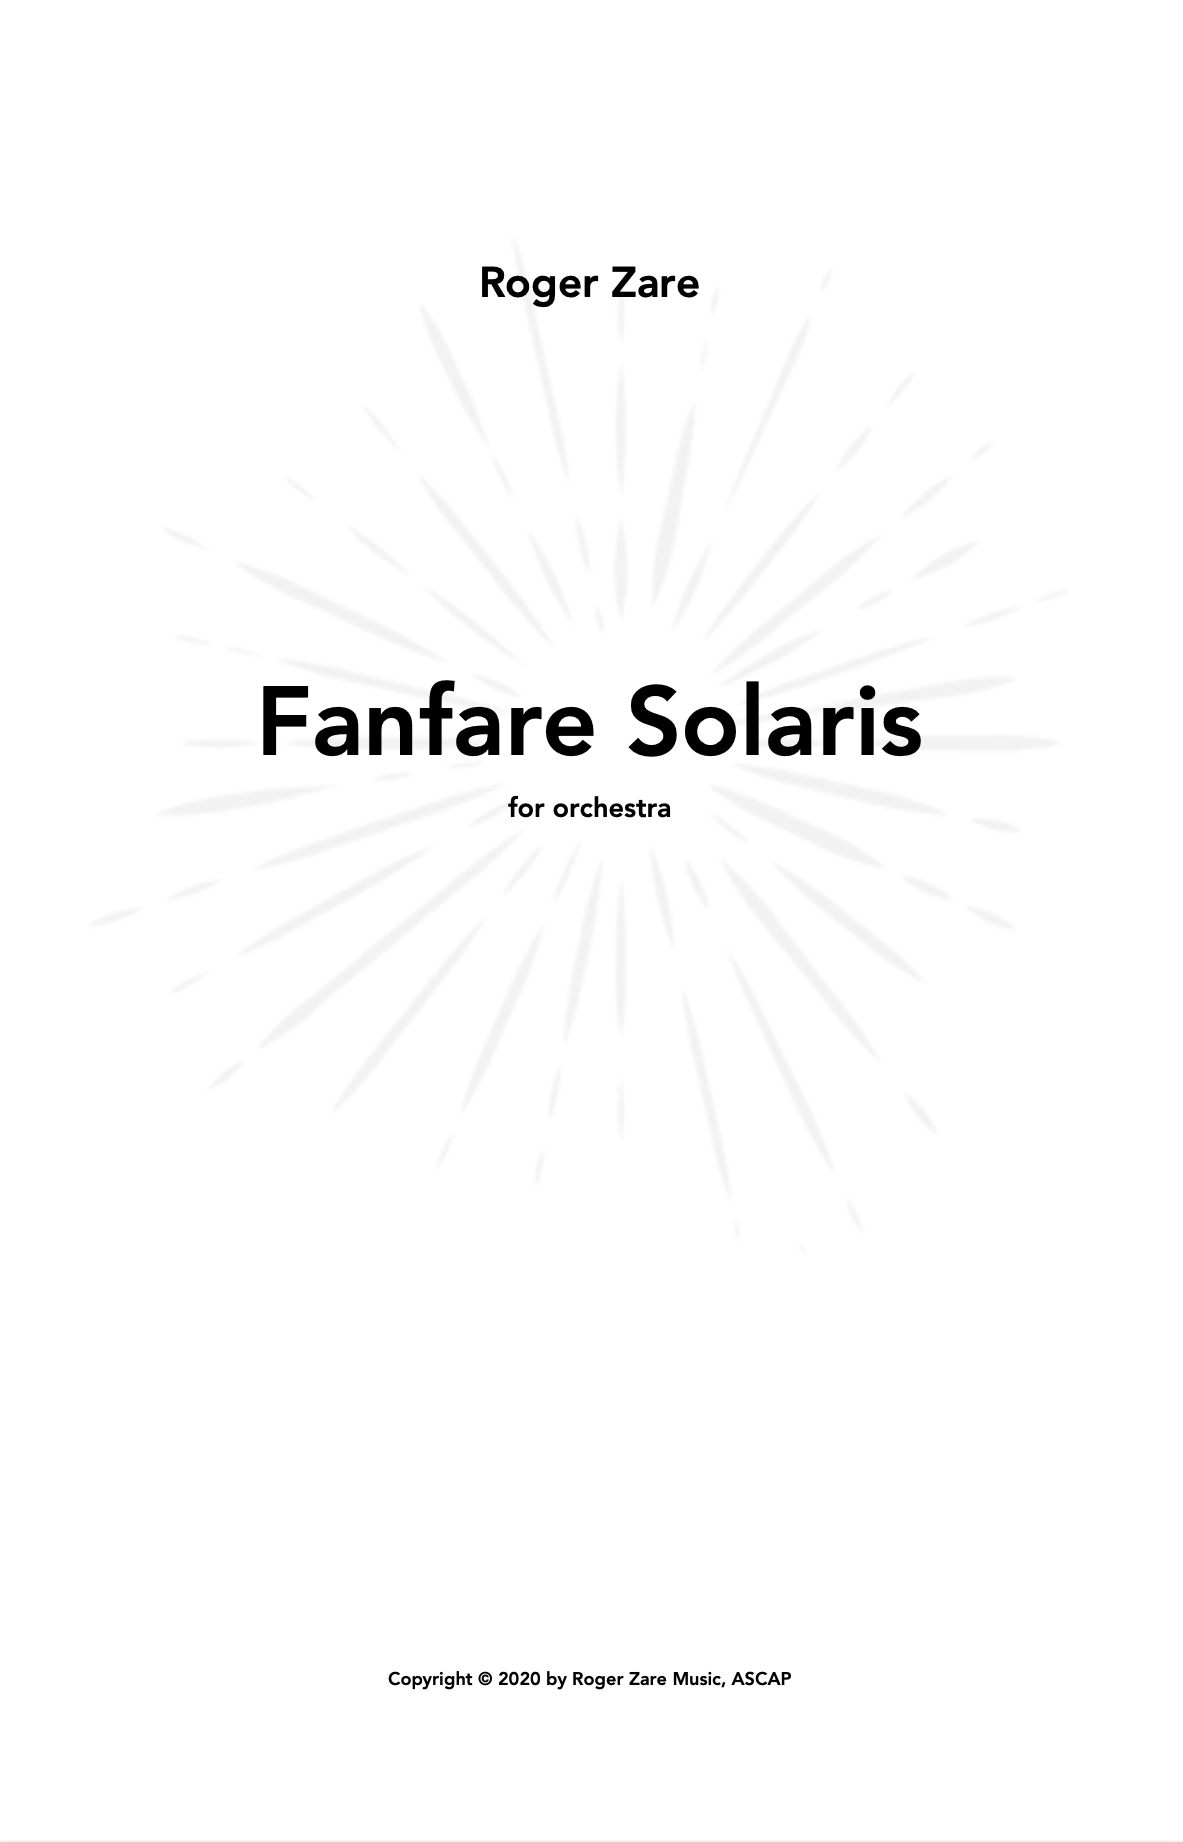 Fanfare Solaris (Score Only) by Roger Zare